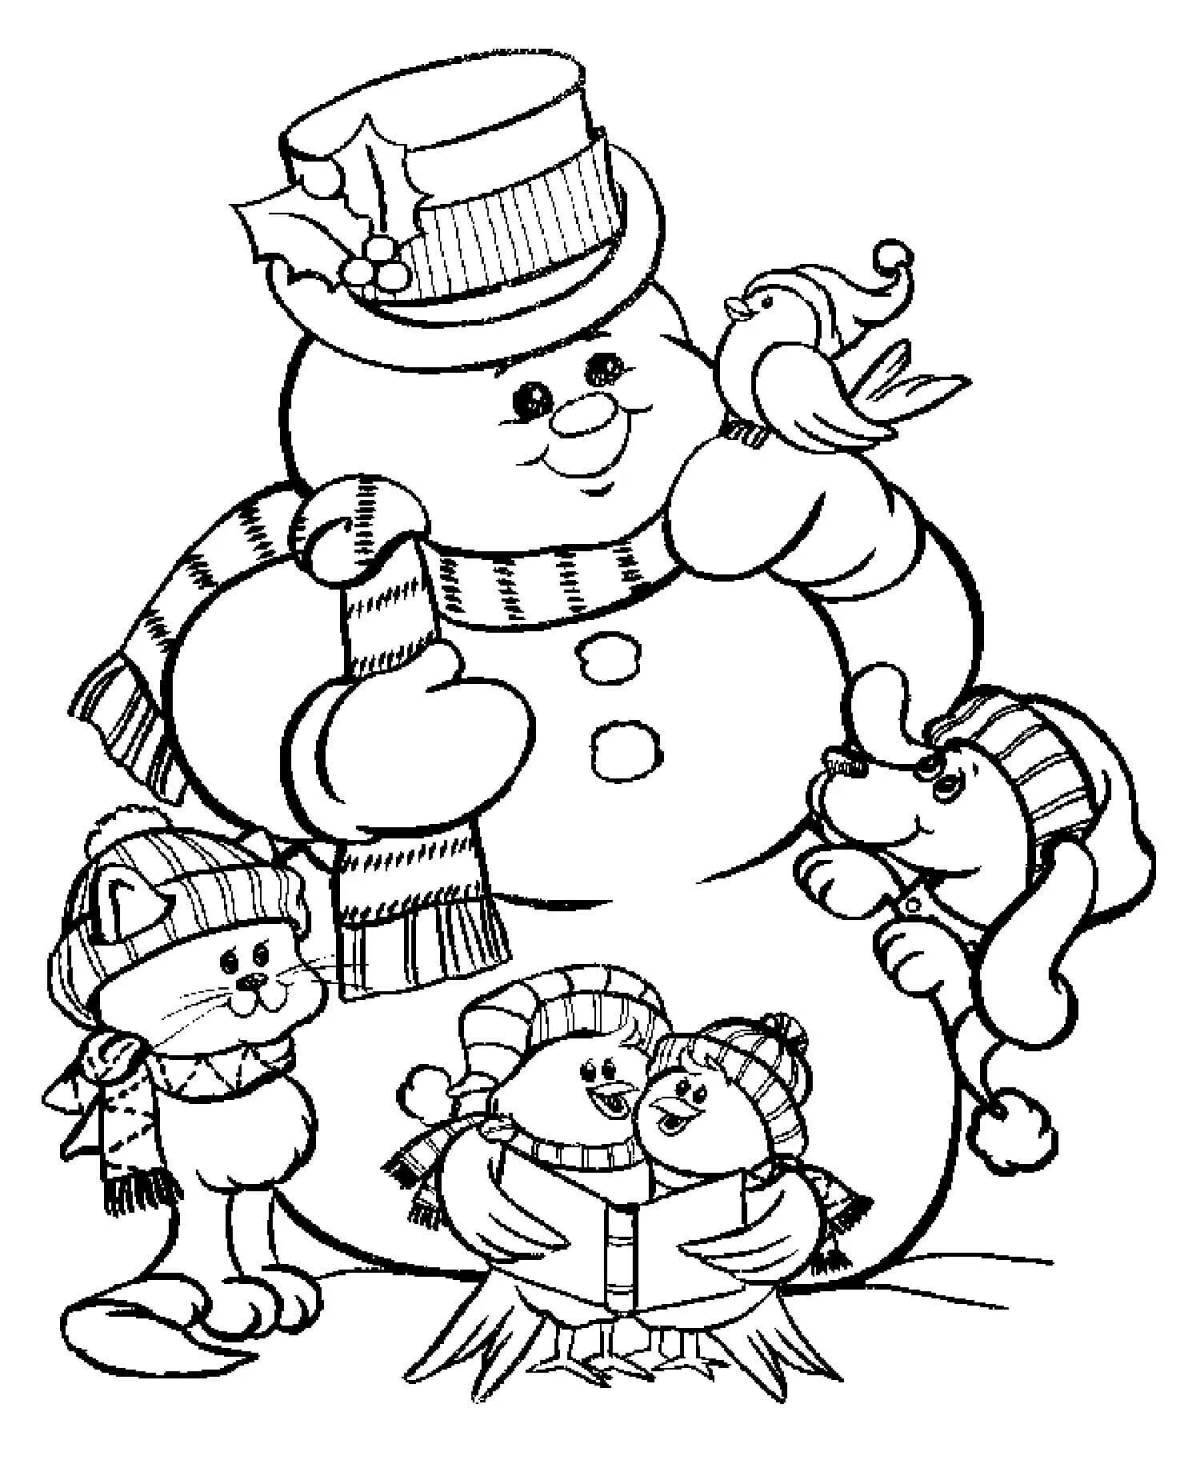 Colored children's coloring snowman